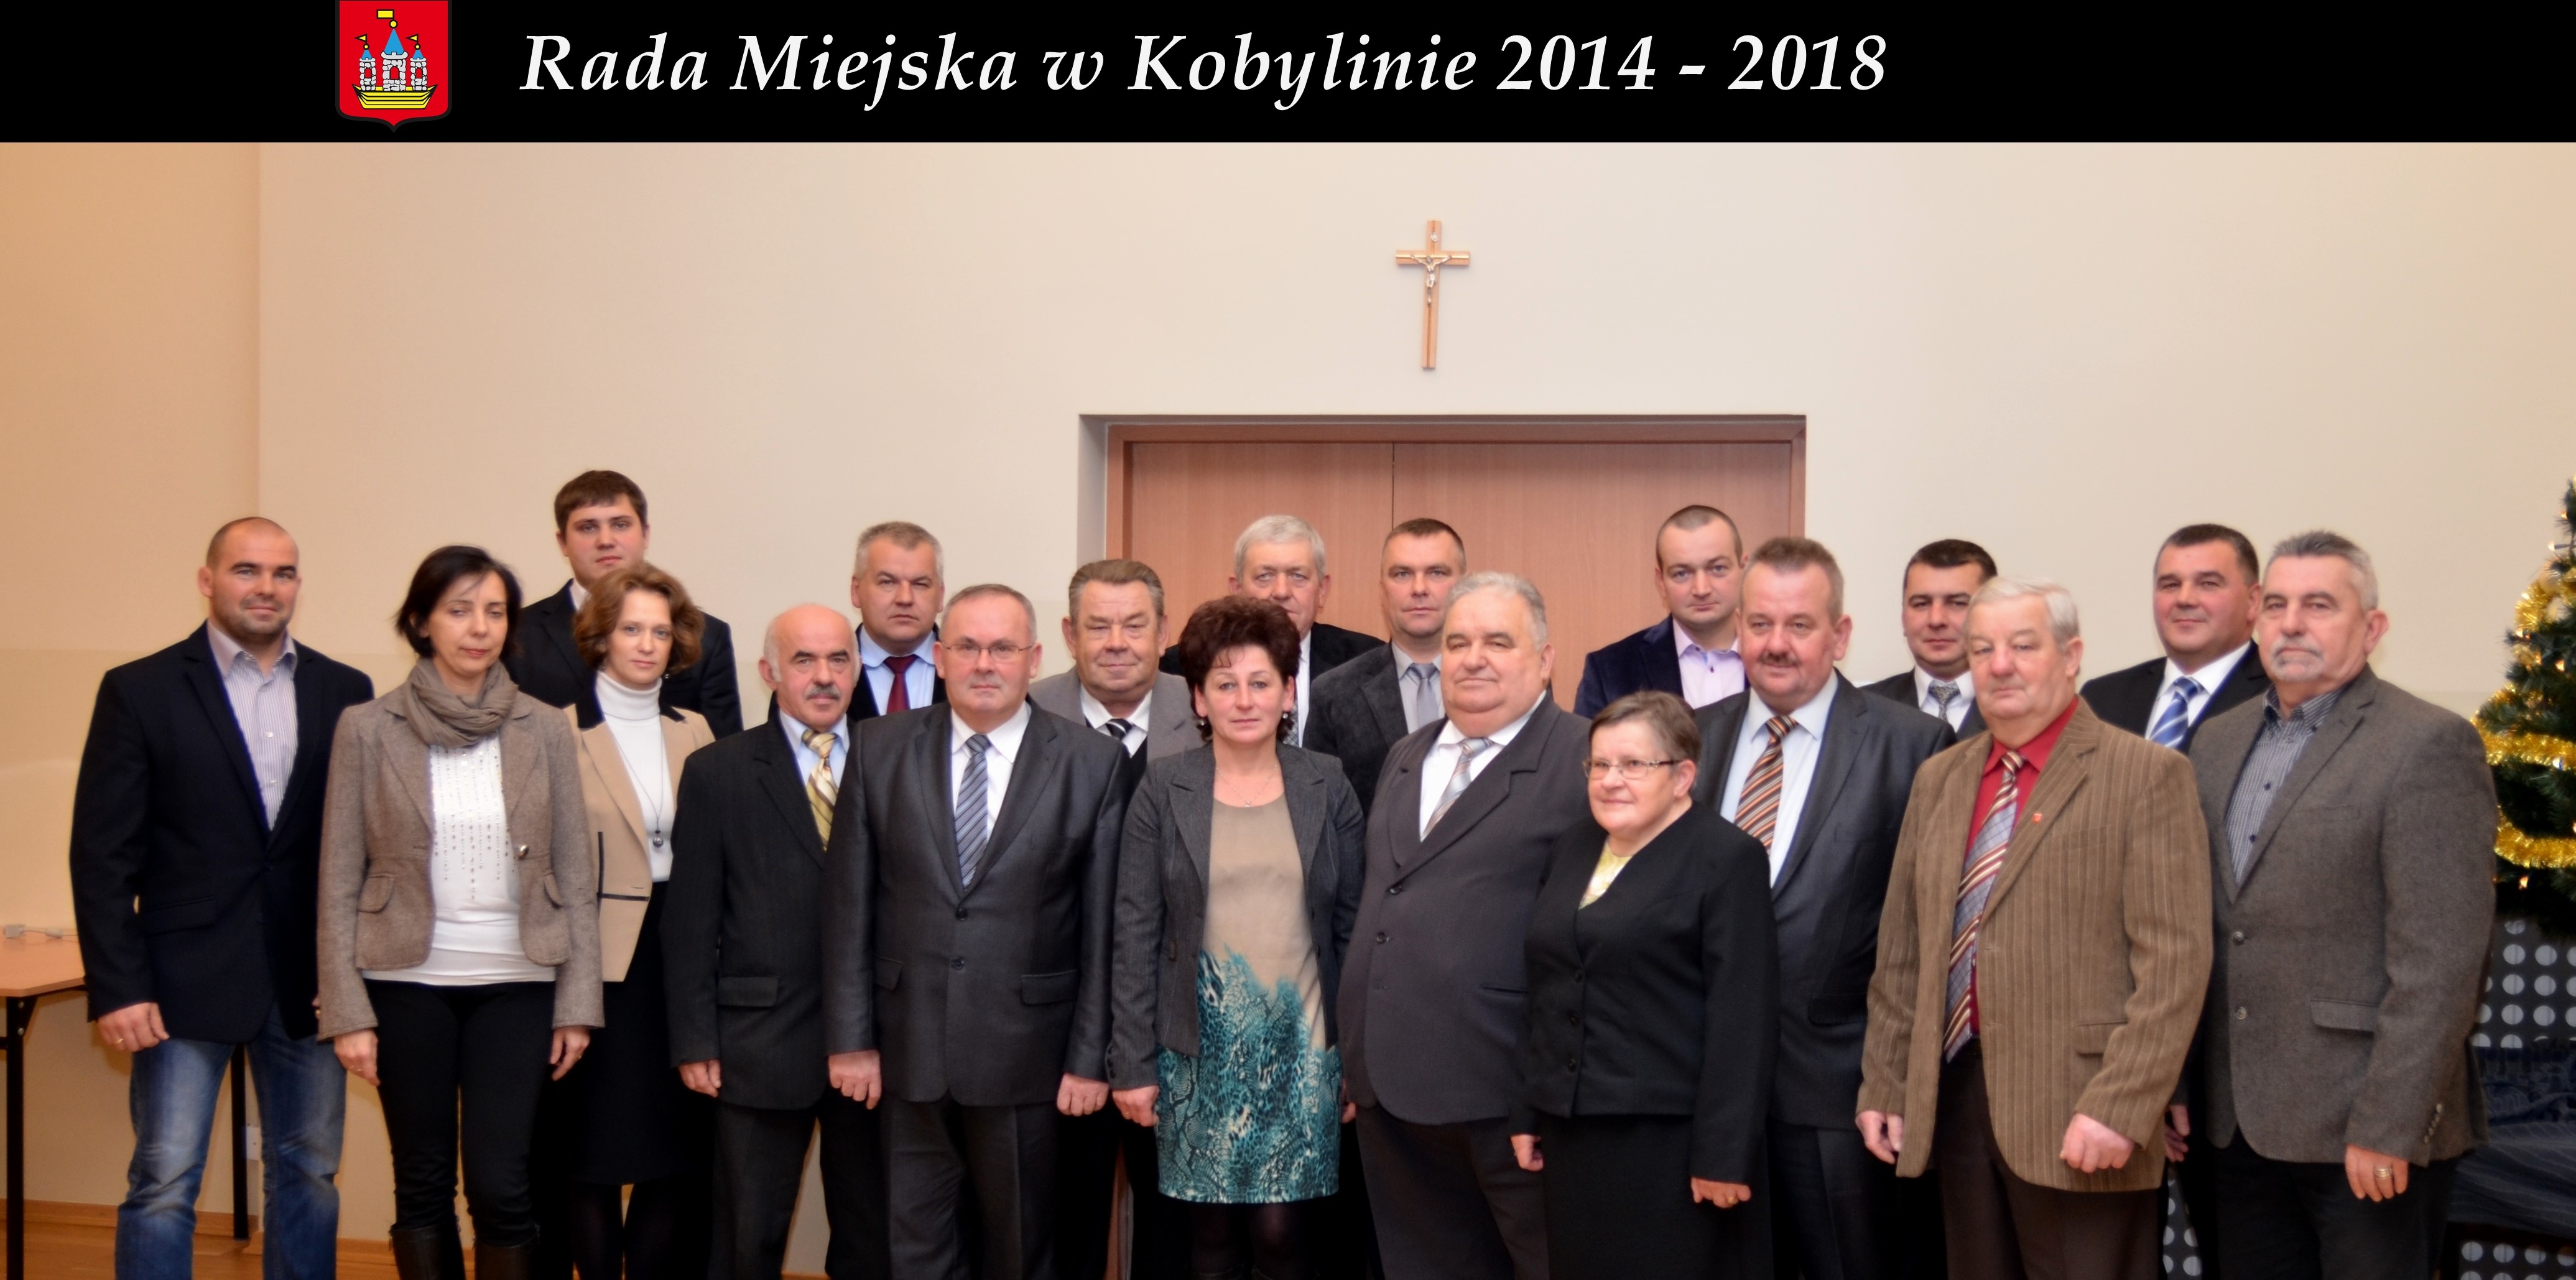 Rada Miejska 2014 - 2018